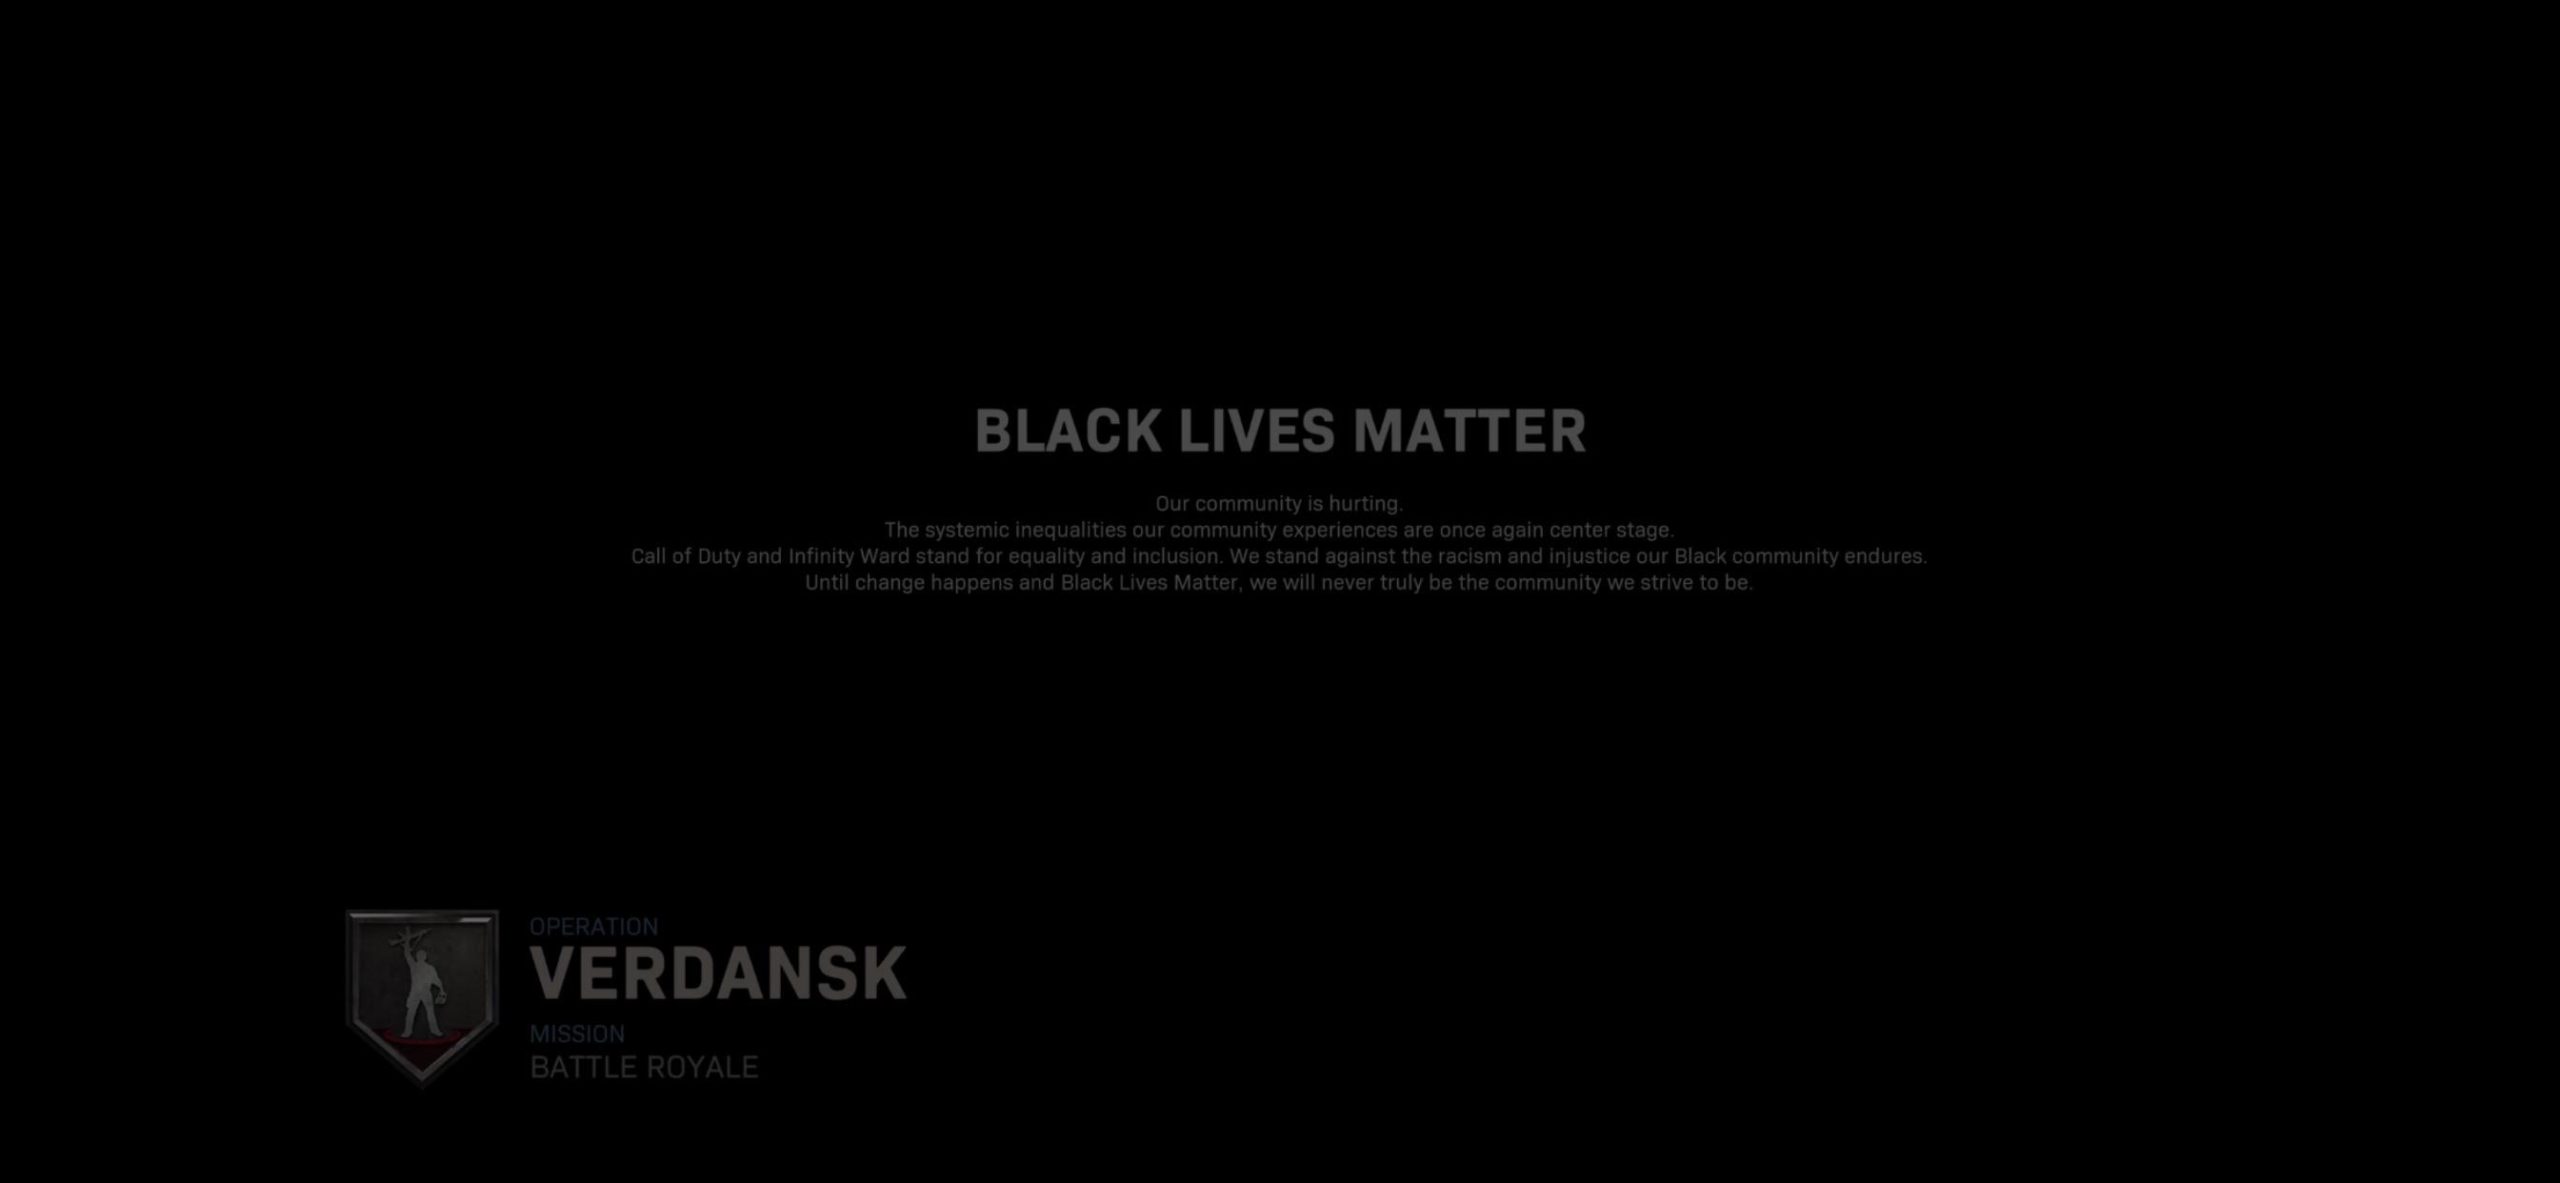  Call of Duty: Modern Warfare, Warzone add Black Lives Matter screen before matches 